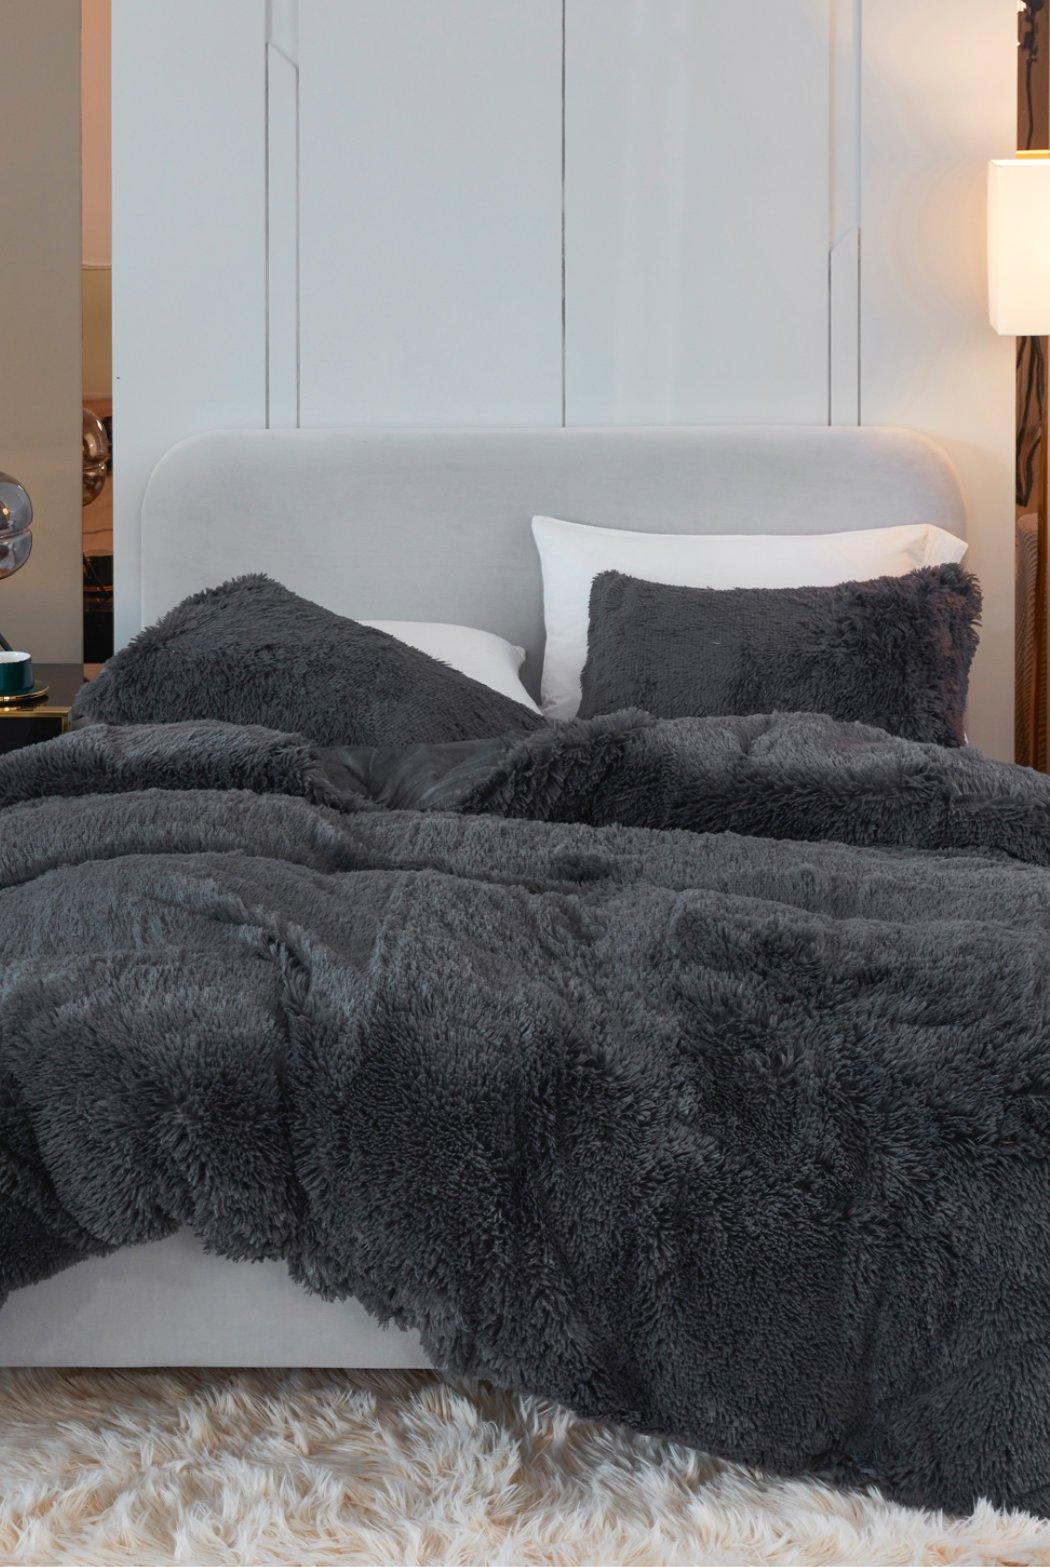 Bedding | Black Faux Fur Duvet Cover Set | Ezysleep